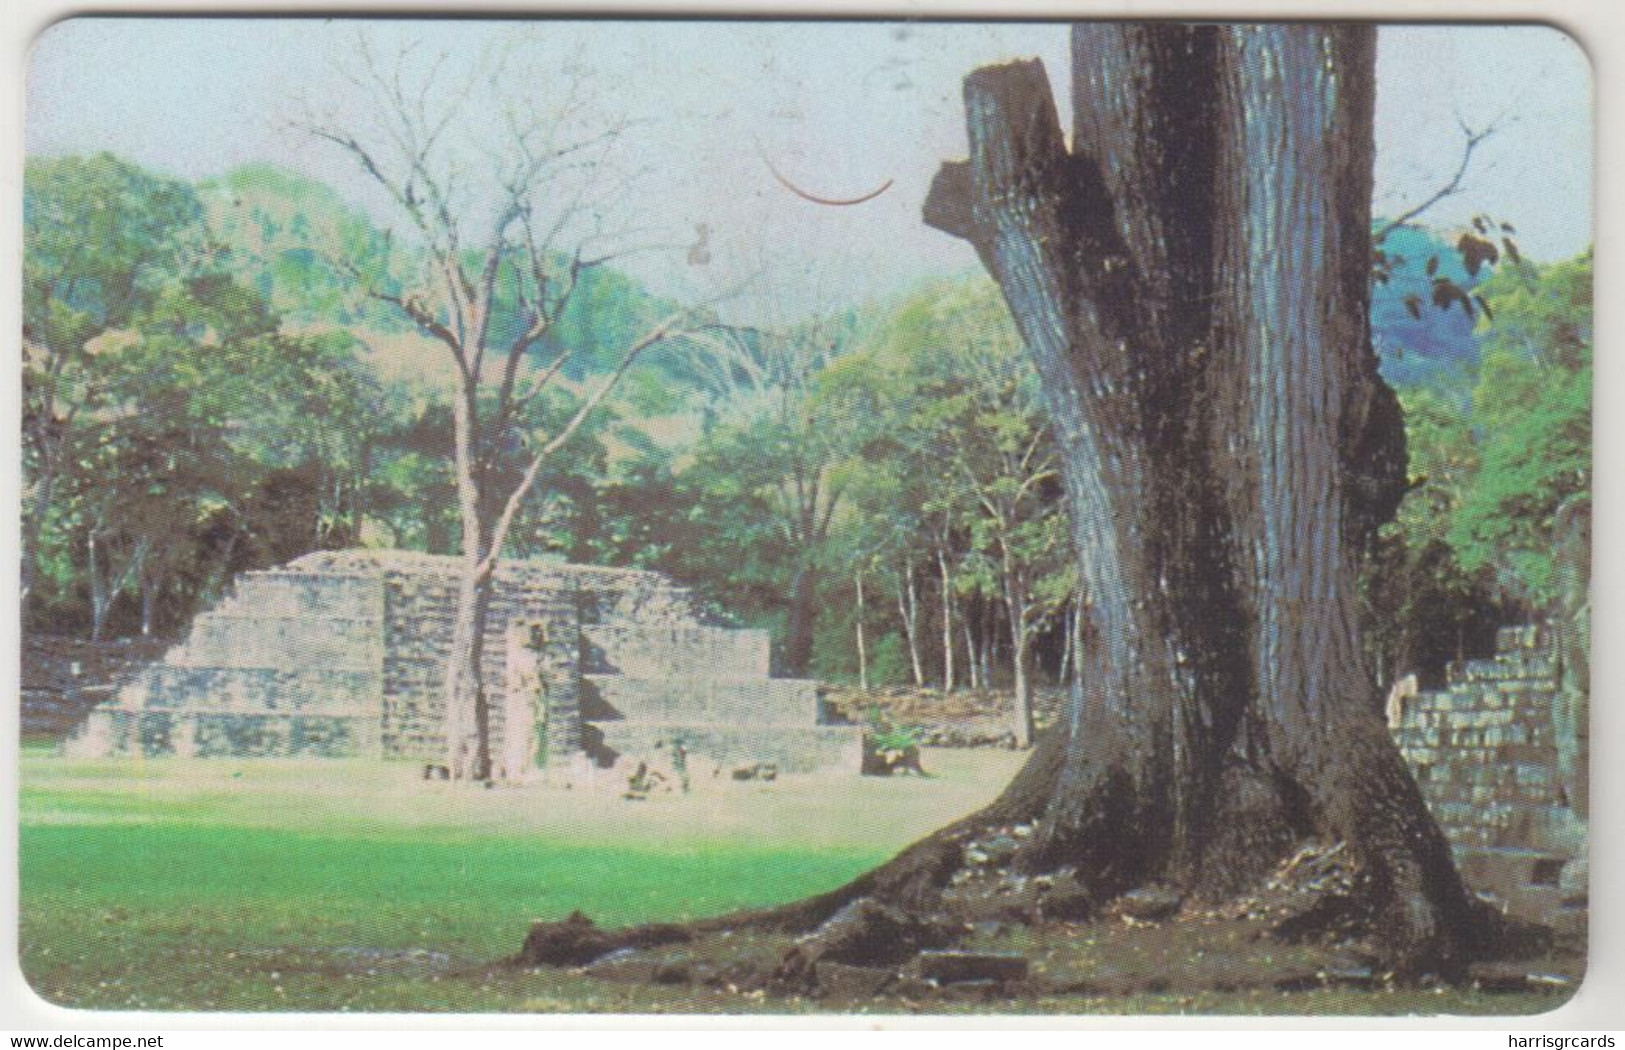 HONDURAS - Maya Temple, Hondutel, 1HONEPB (Normal Zero: "0"), 250 U ,used - Honduras